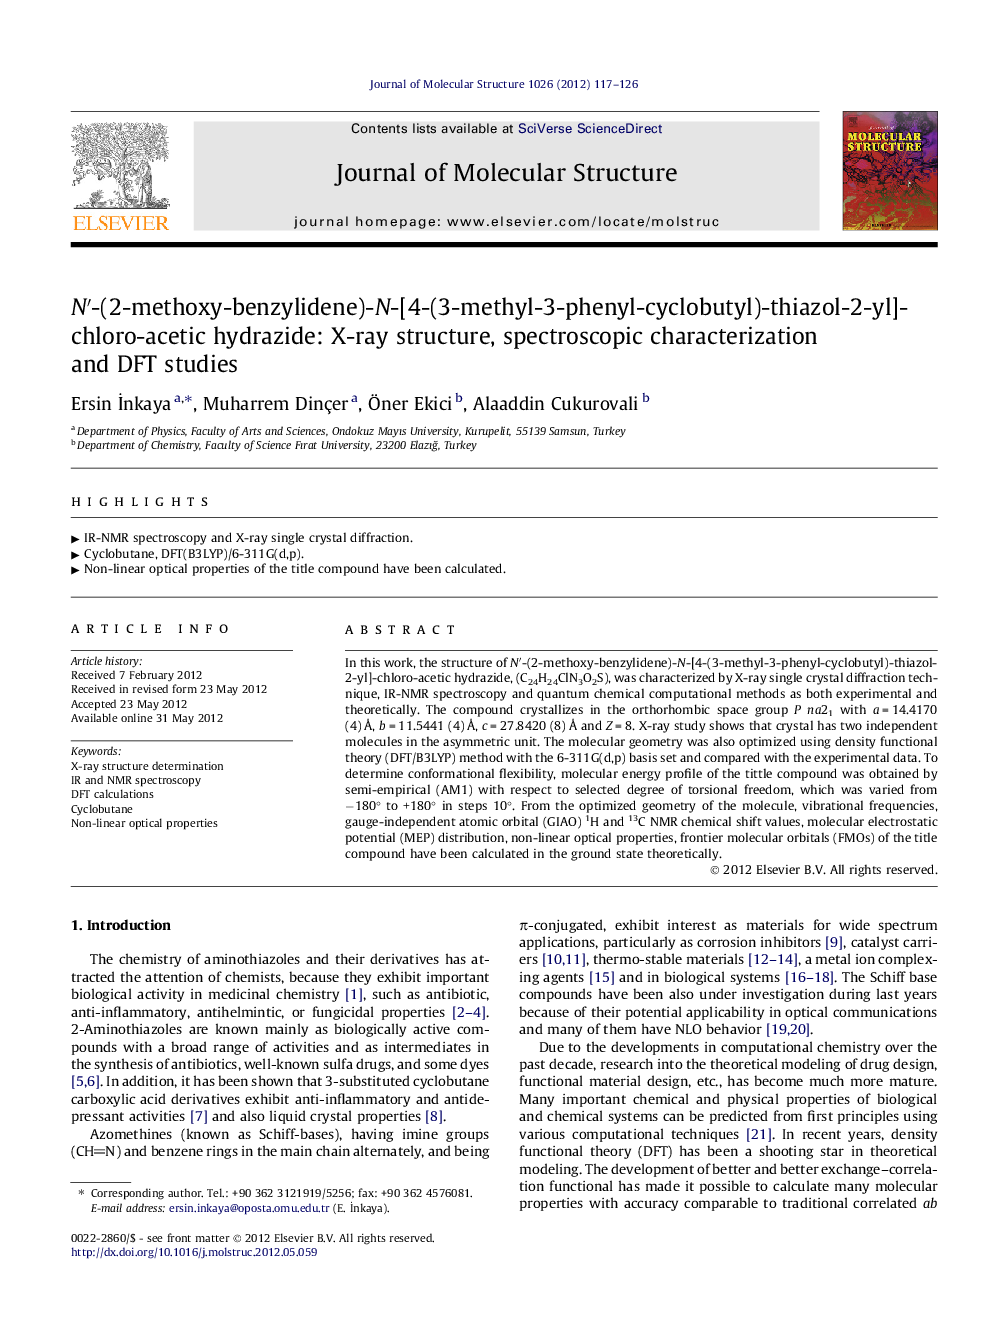 N′-(2-methoxy-benzylidene)-N-[4-(3-methyl-3-phenyl-cyclobutyl)-thiazol-2-yl]-chloro-acetic hydrazide: X-ray structure, spectroscopic characterization and DFT studies